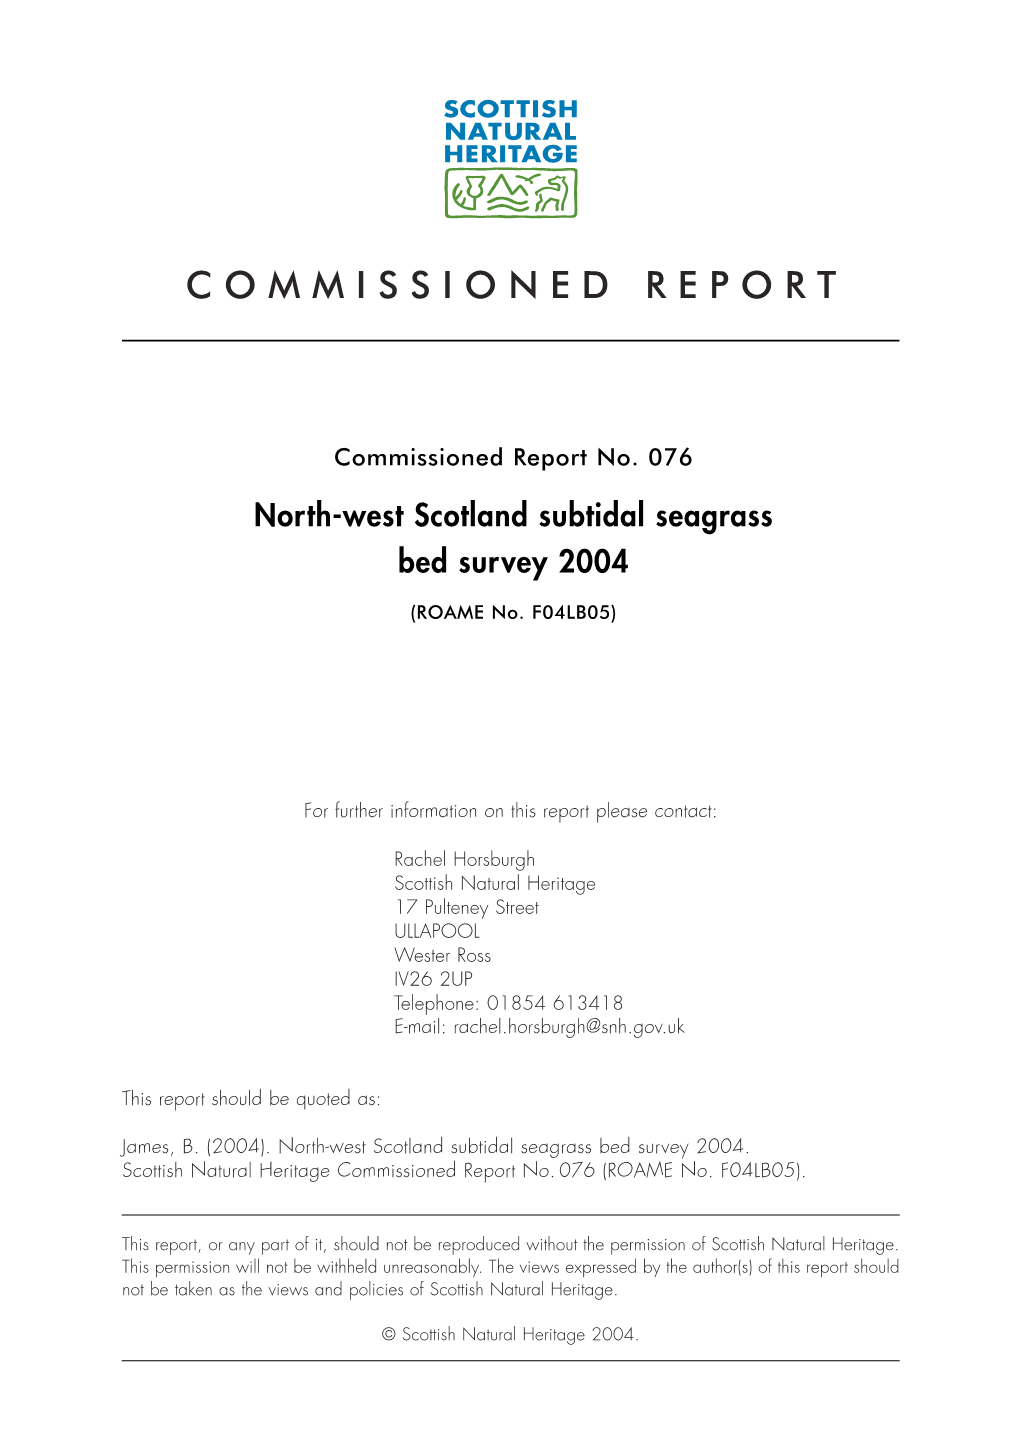 North-West Scotland Subtidal Seagrass Bed Survey 2004